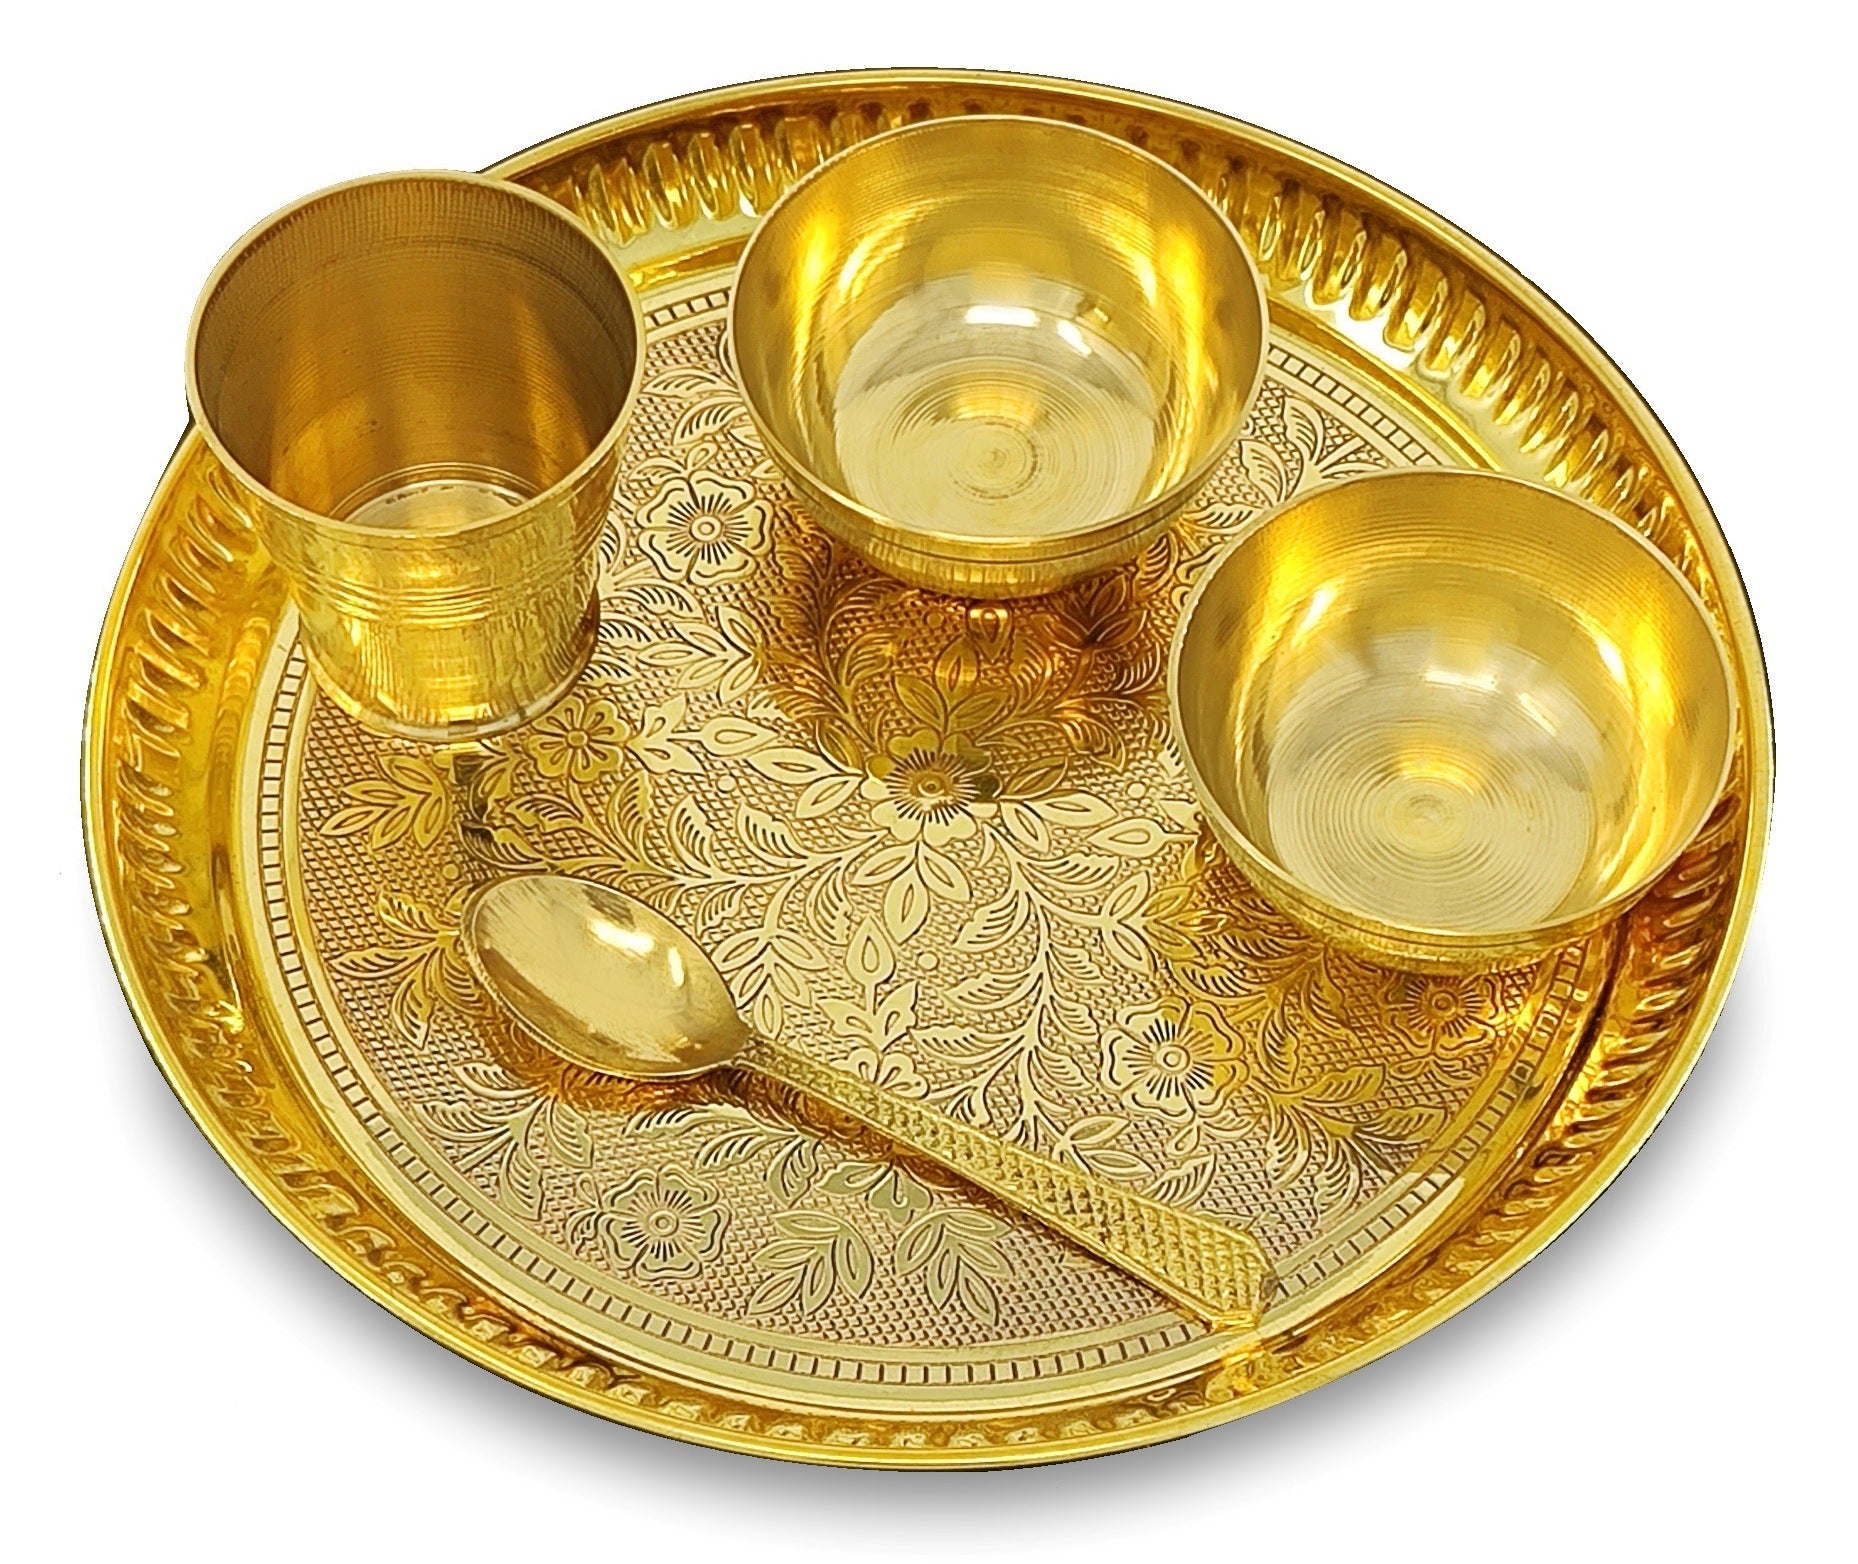 BENGALEN Brass Pooja Thali Set 8 Inch Puja Bhog Thali with Pital Plate Bowl Glass Spoon Arti Thali for Diwali Home Office Mandir Wedding Return Gift Items